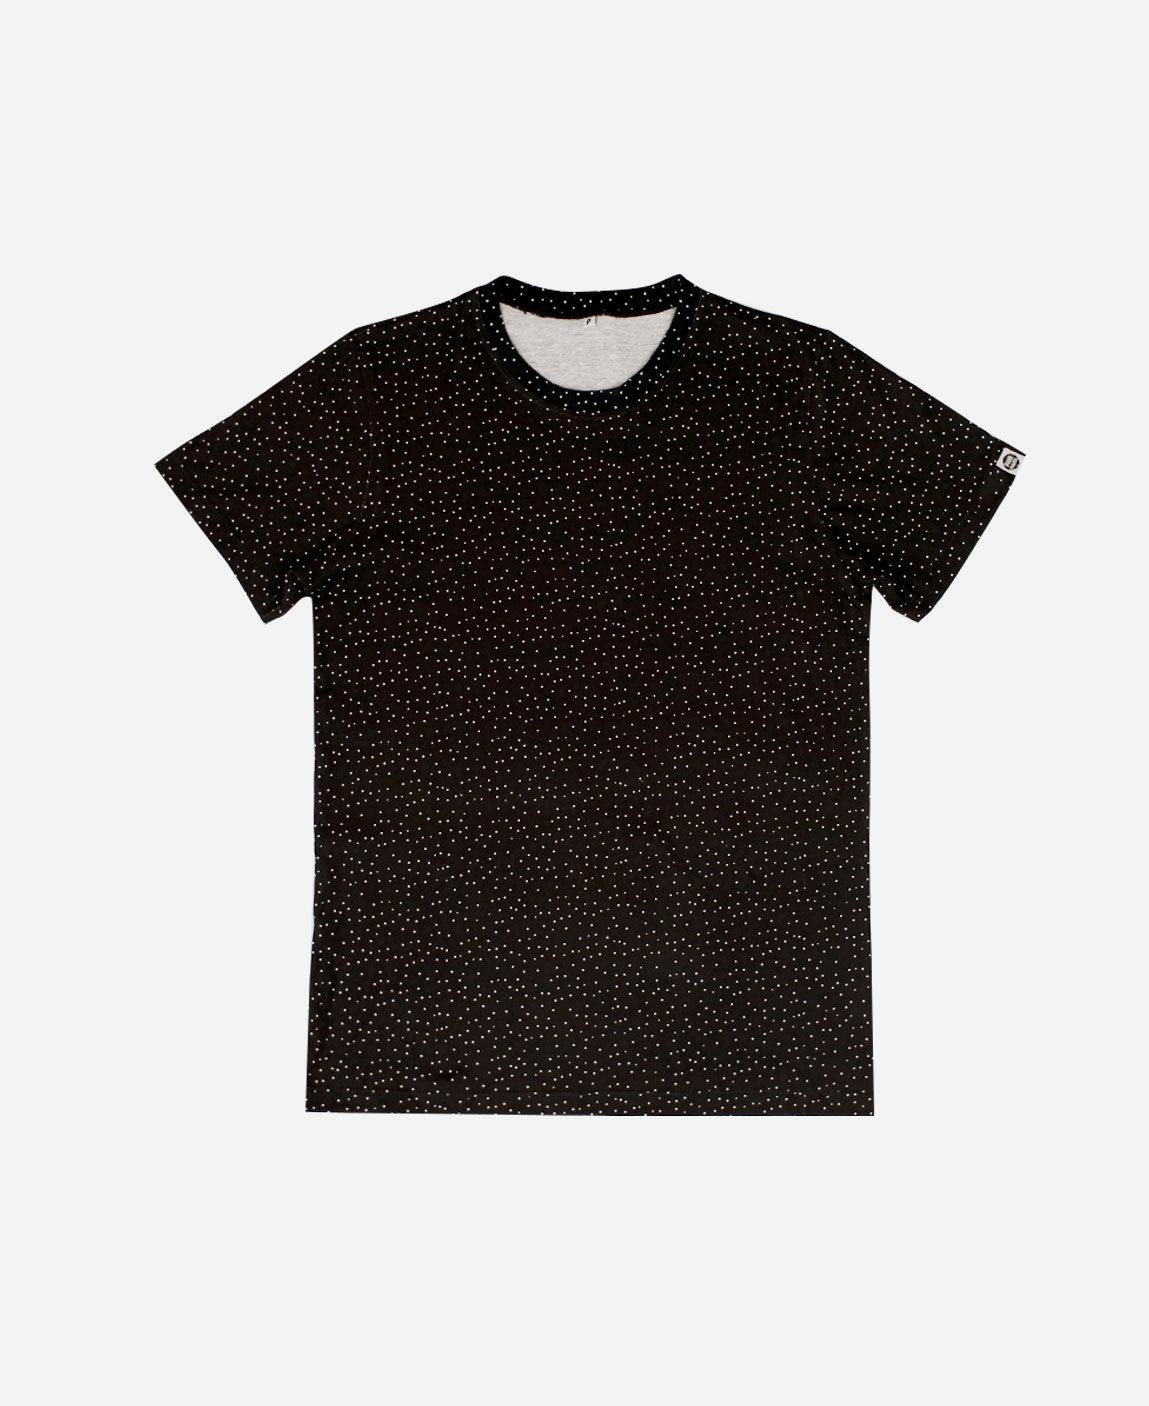 Camiseta Adulto Unissex Bolinhas Escuro - MiniMalista Baby - b2b, Meia Estação, Menina, Neutro, outlet, Unissex -bebê-minimalista-estiloso